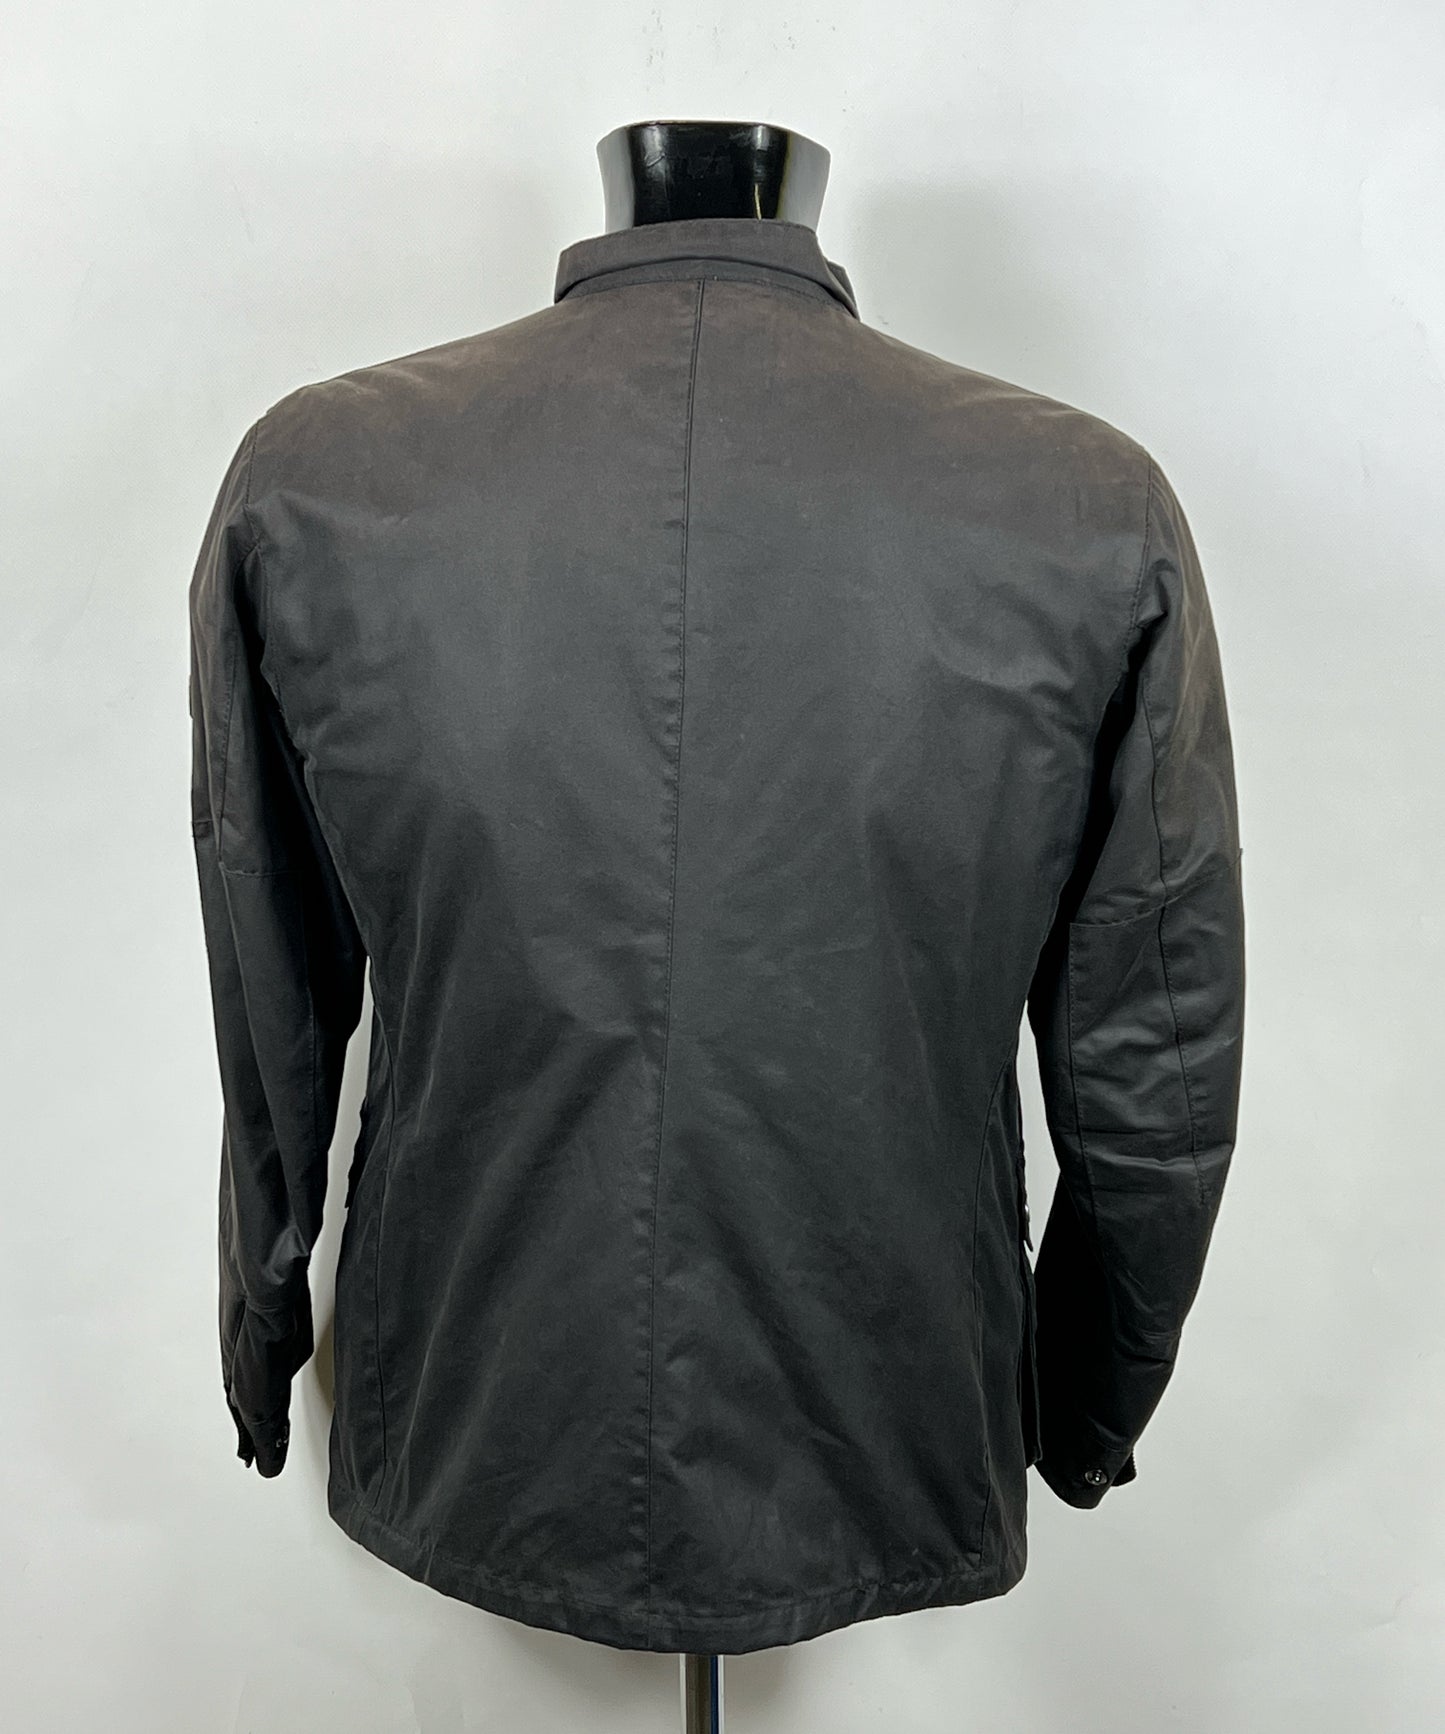 Giacca Barbour International Duke nero M - Man black Duke wax Jacket Size M